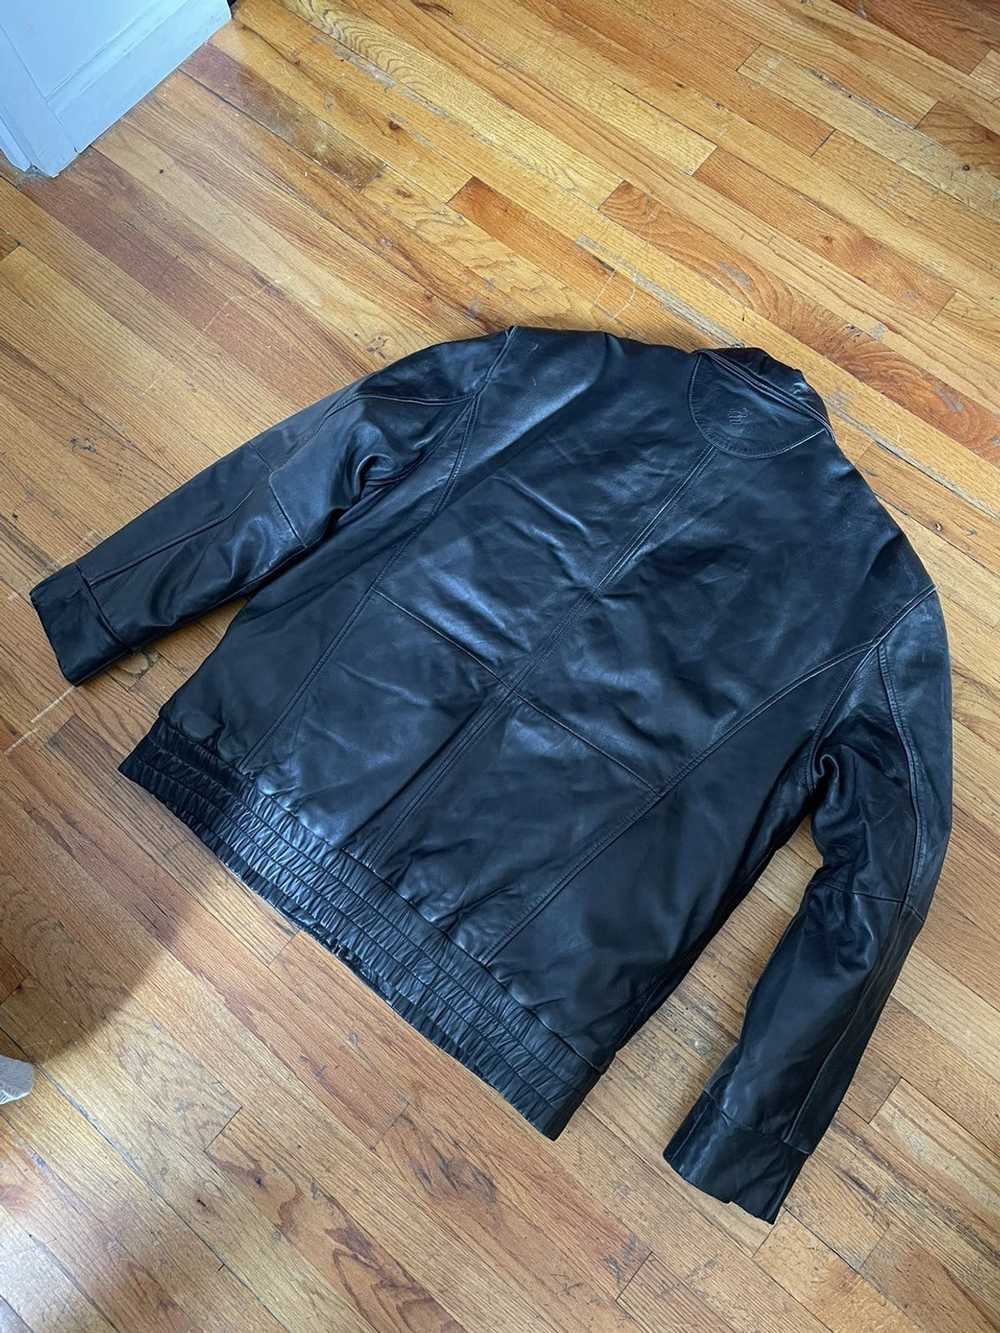 Rocawear Rocawear Leather Jacket - image 10